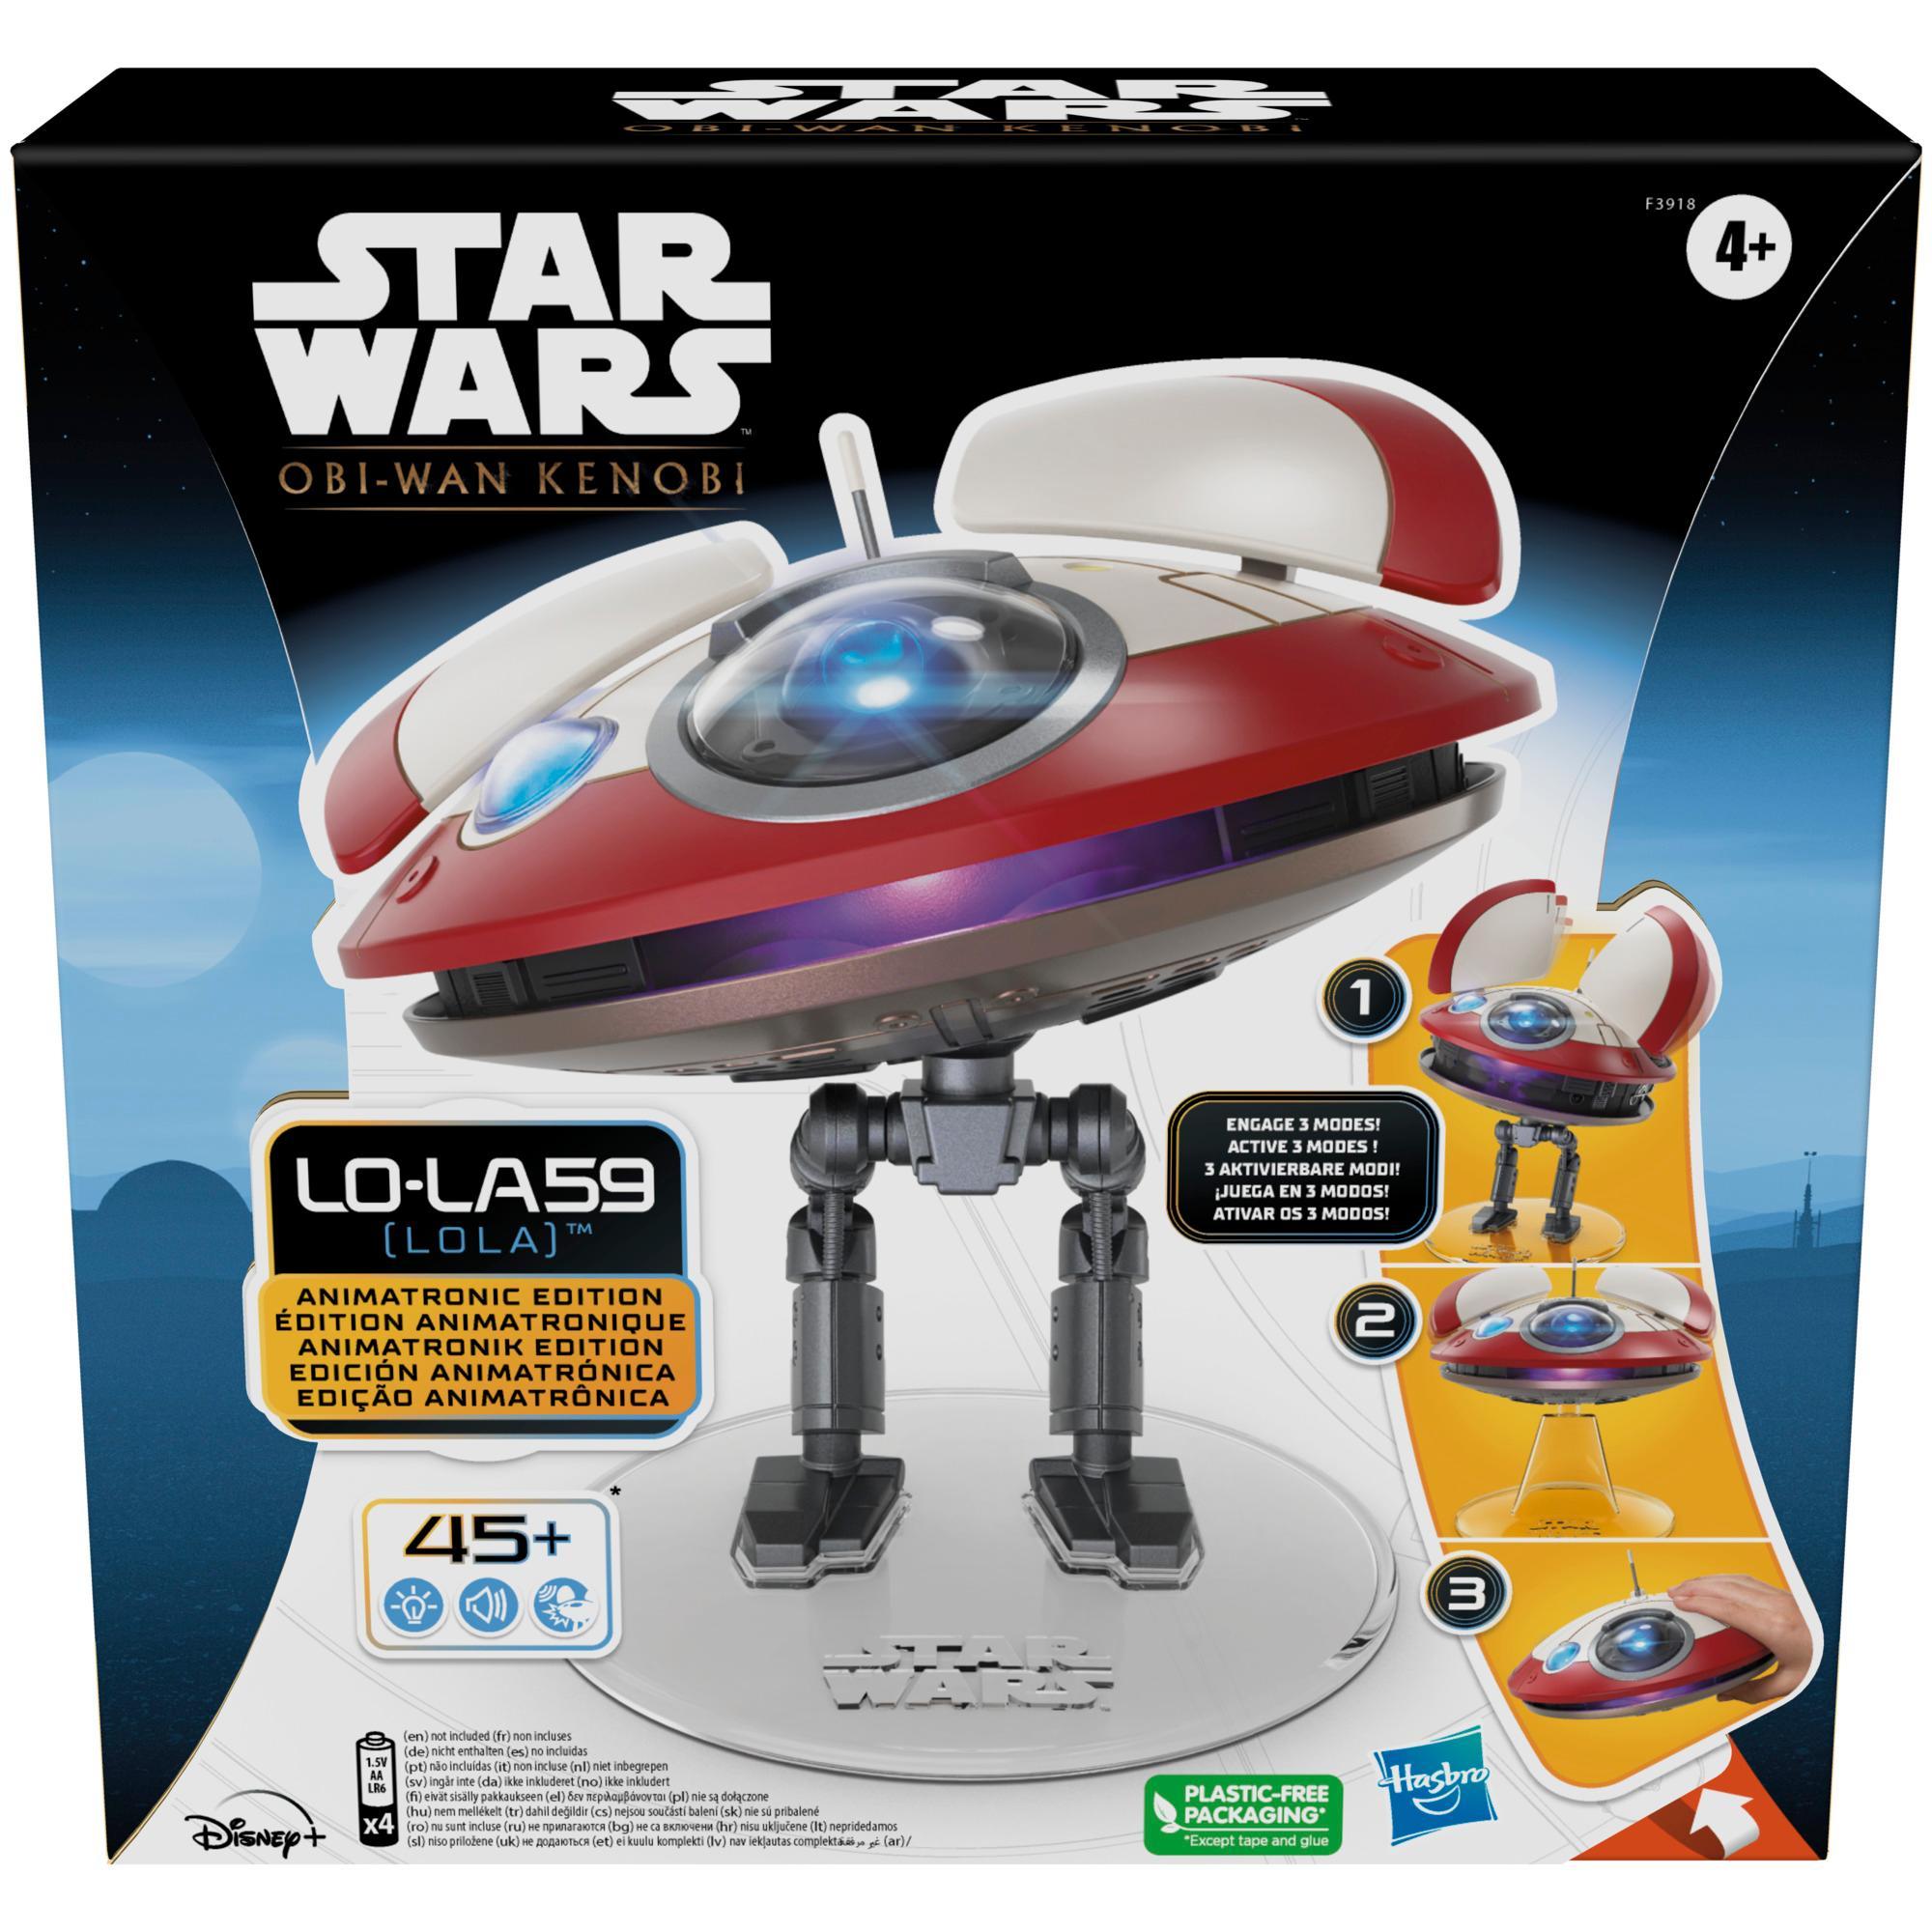 Star Wars L0-LA59 (Lola) Animatronic Edition, Obi-Wan Kenobi Series-Inspired Droid Toy for Kids Ages 4 Up - Star